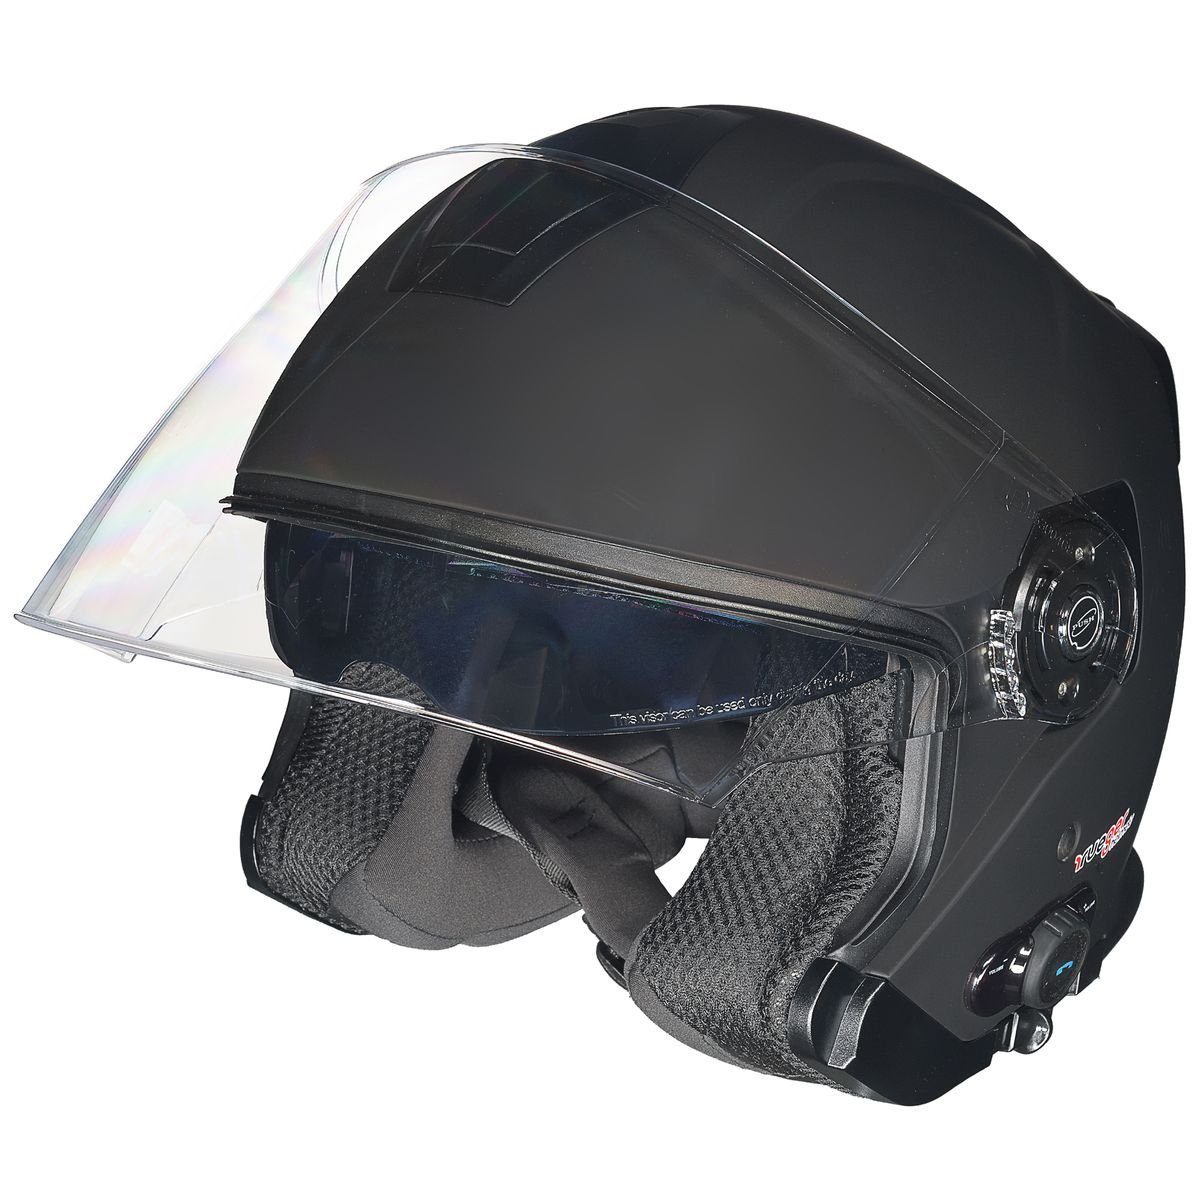 rueger-helmets Motorradhelm »Bluetooth Intercom Sprechanlage Headset T-Com  Klapphelm Jethelm Crosshem Integralhelm RF-586COM Matt Schwarz XS Jethelm«  online kaufen | OTTO